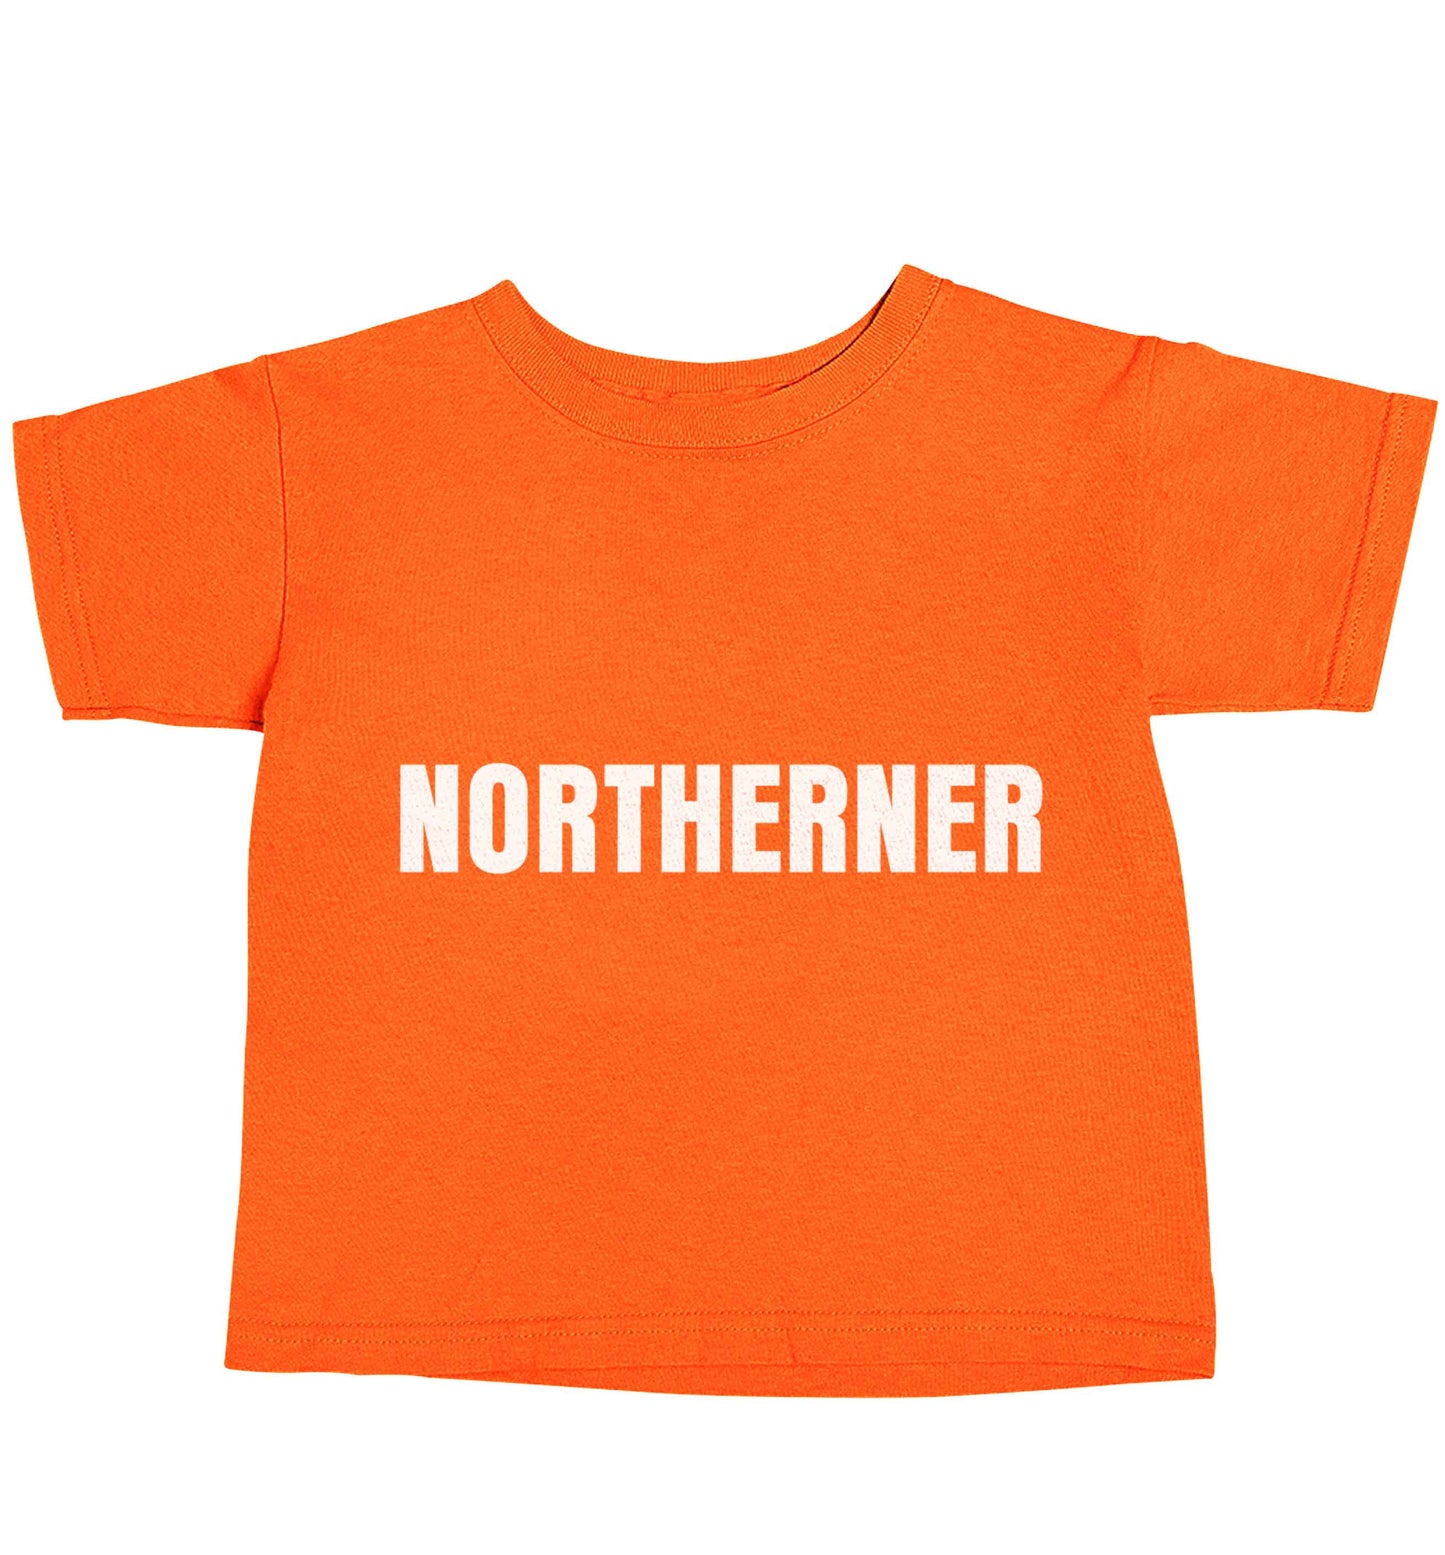 Northerner orange baby toddler Tshirt 2 Years